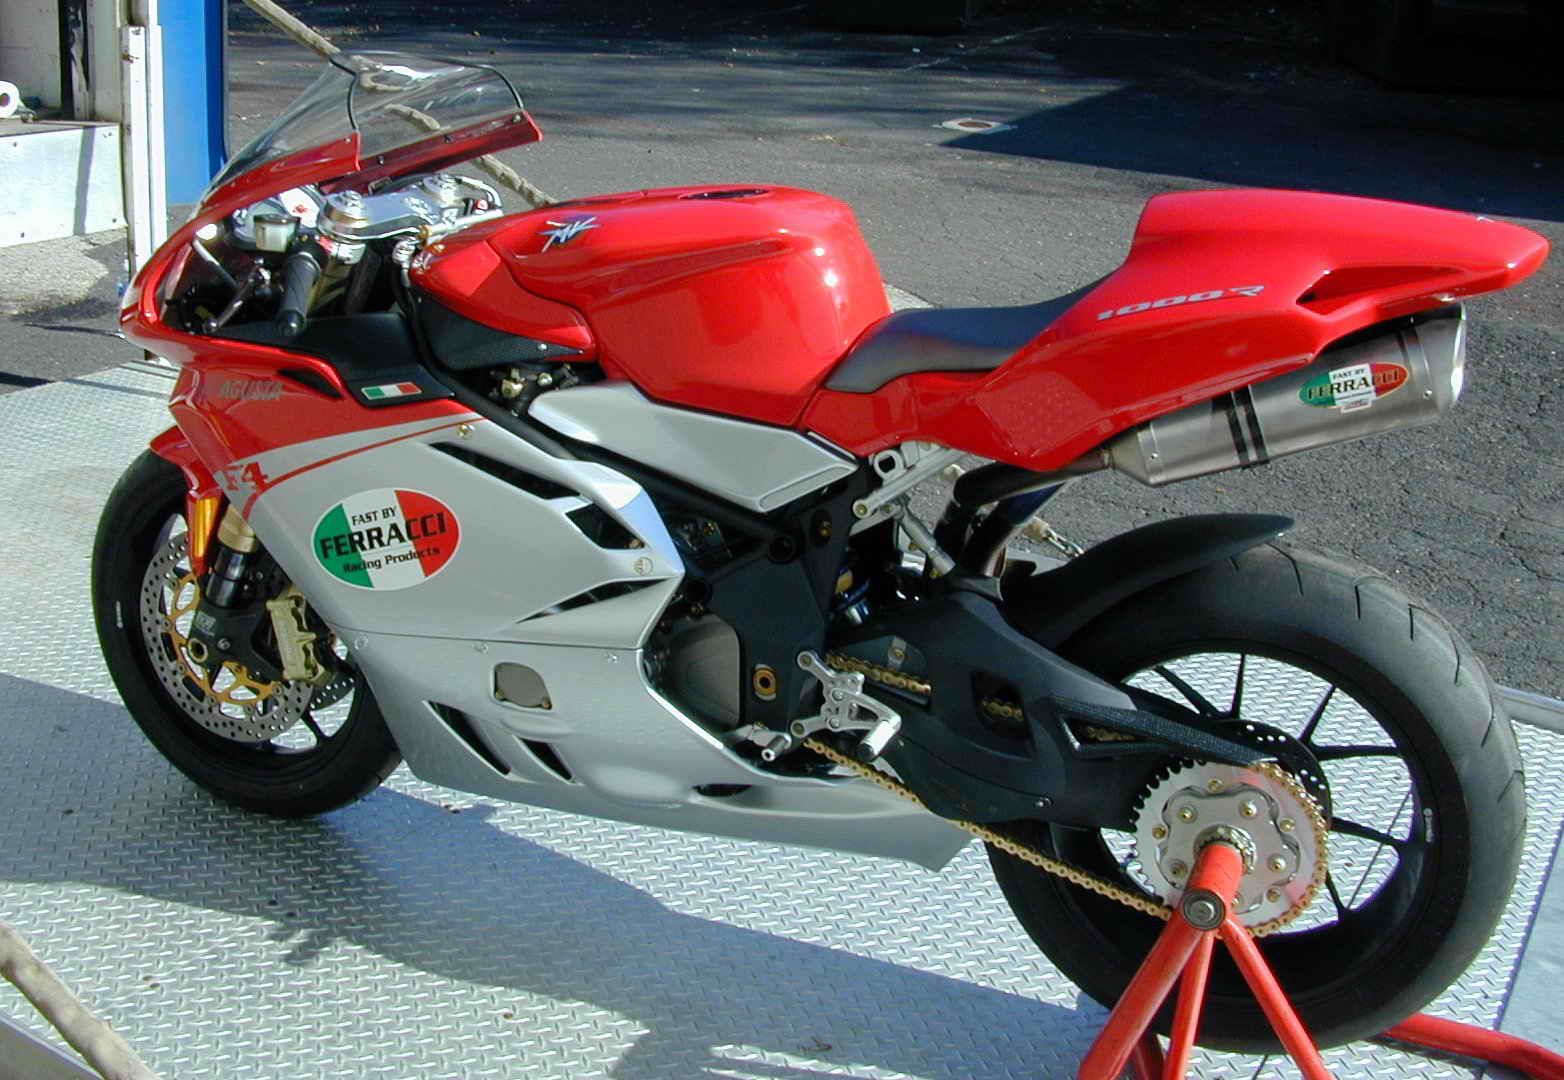 Ferracci's MV Agusta F4 1000 R Race Bike